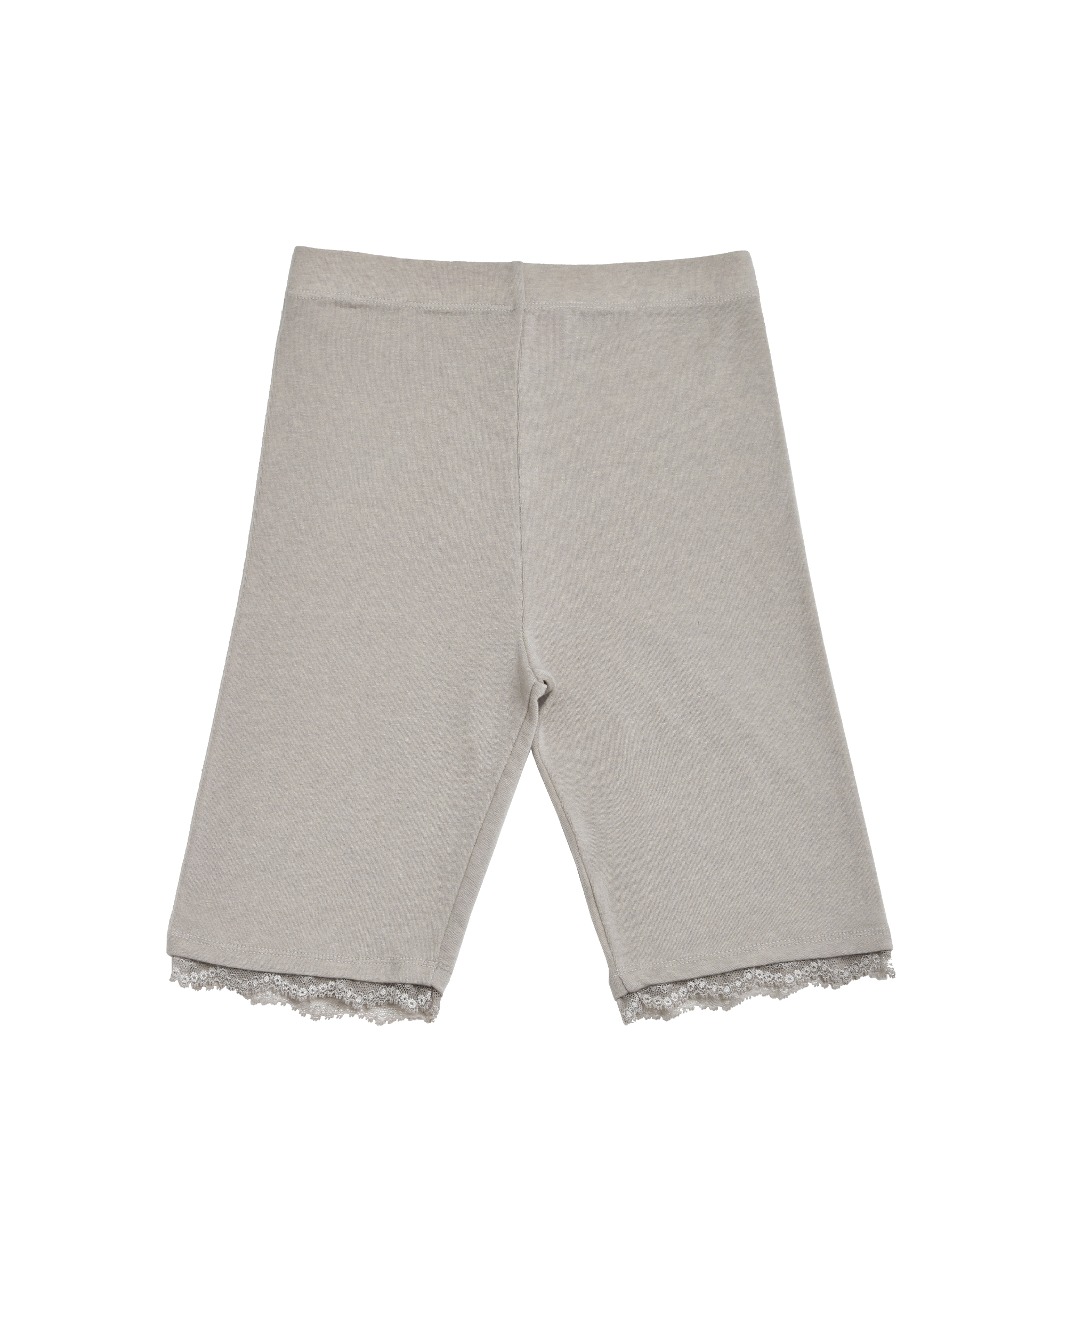 Cozy Lace Shorts (Light Gray)